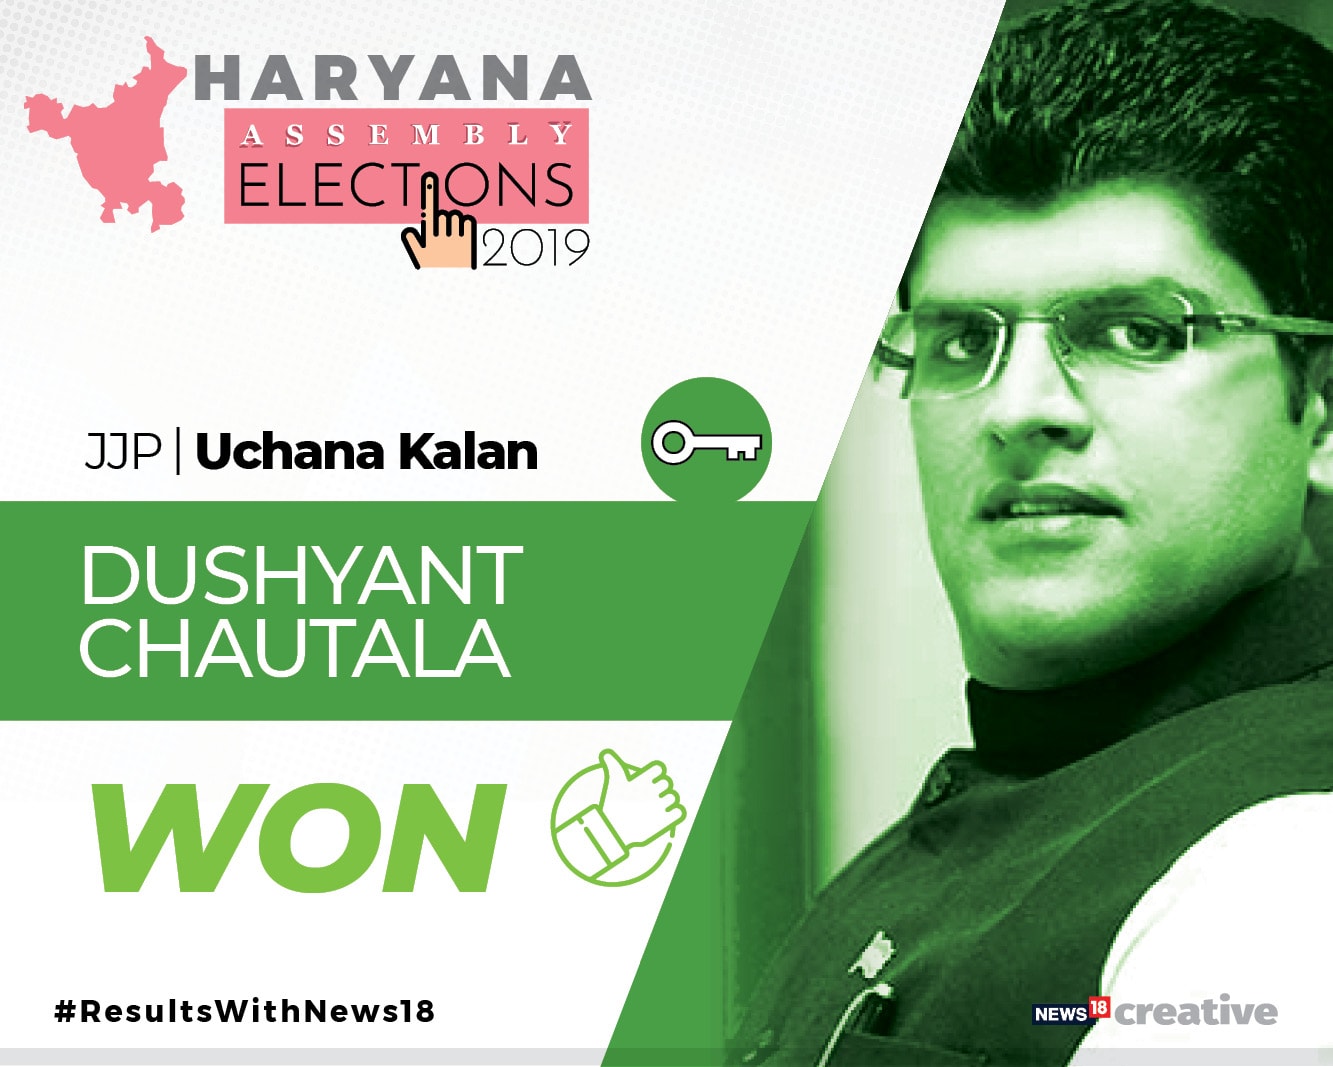 JJP's Dushyant Chautala wins Uchana Kalan seat. Haryana Assembly elections 2019